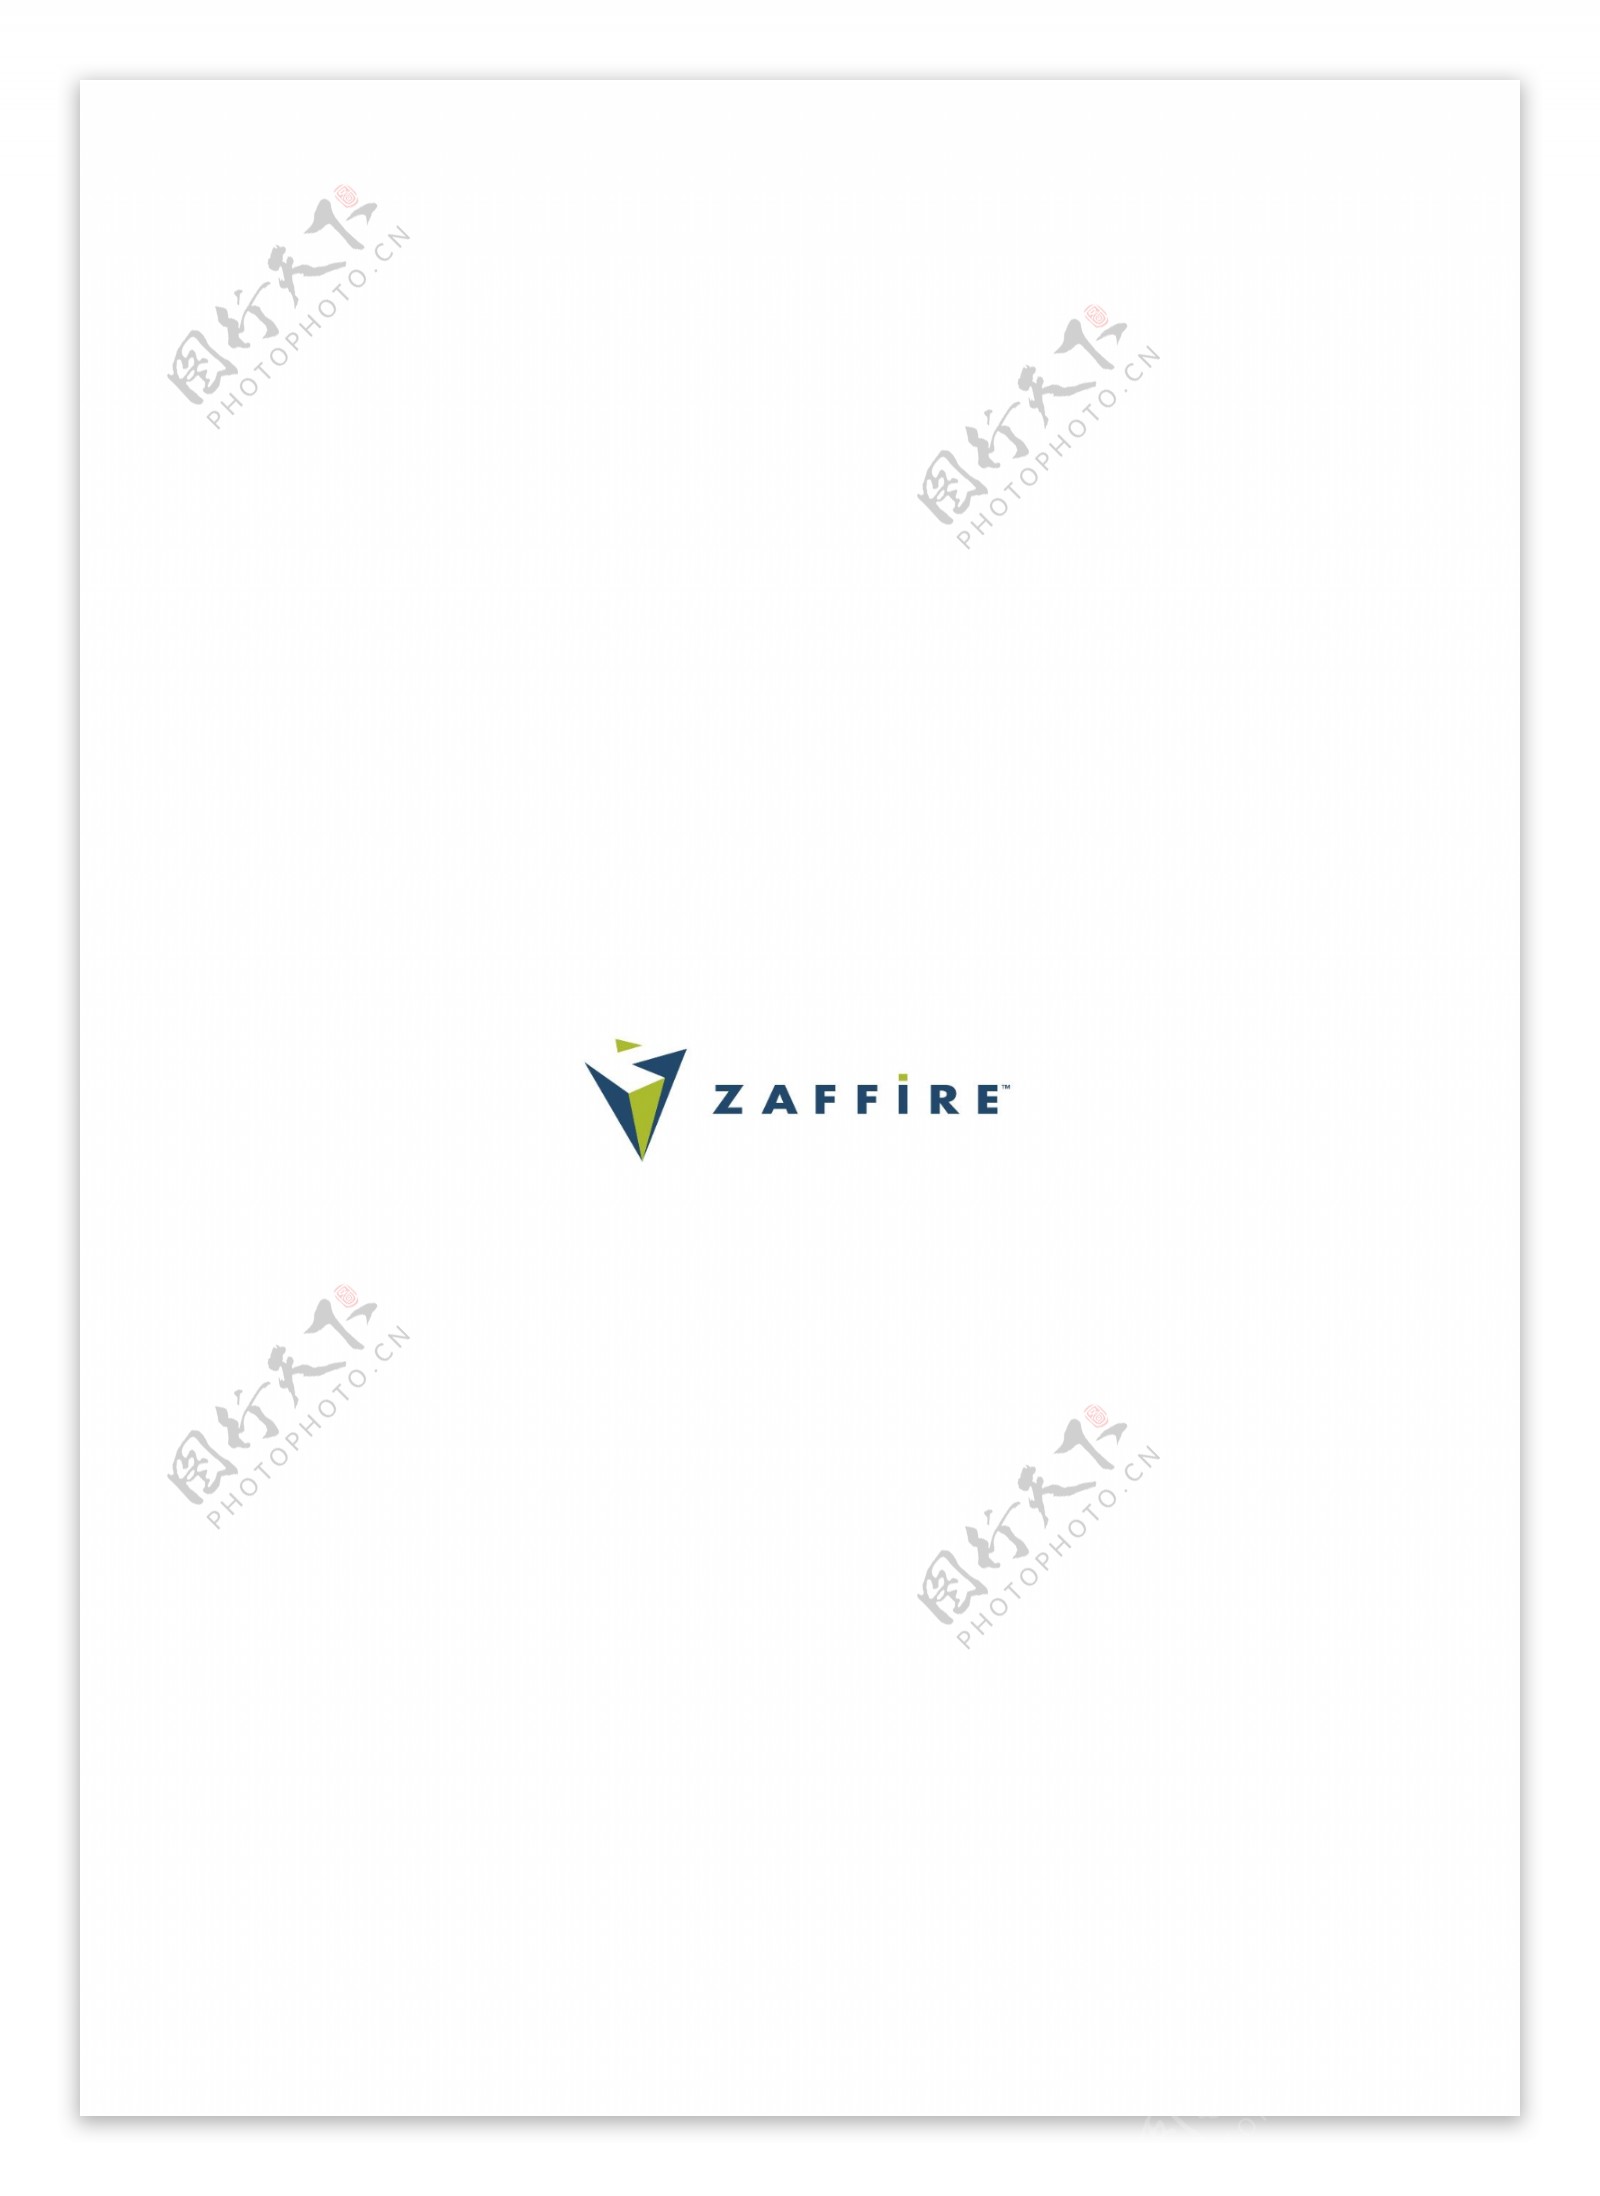 Zaffirelogo设计欣赏Zaffire移动通讯LOGO下载标志设计欣赏